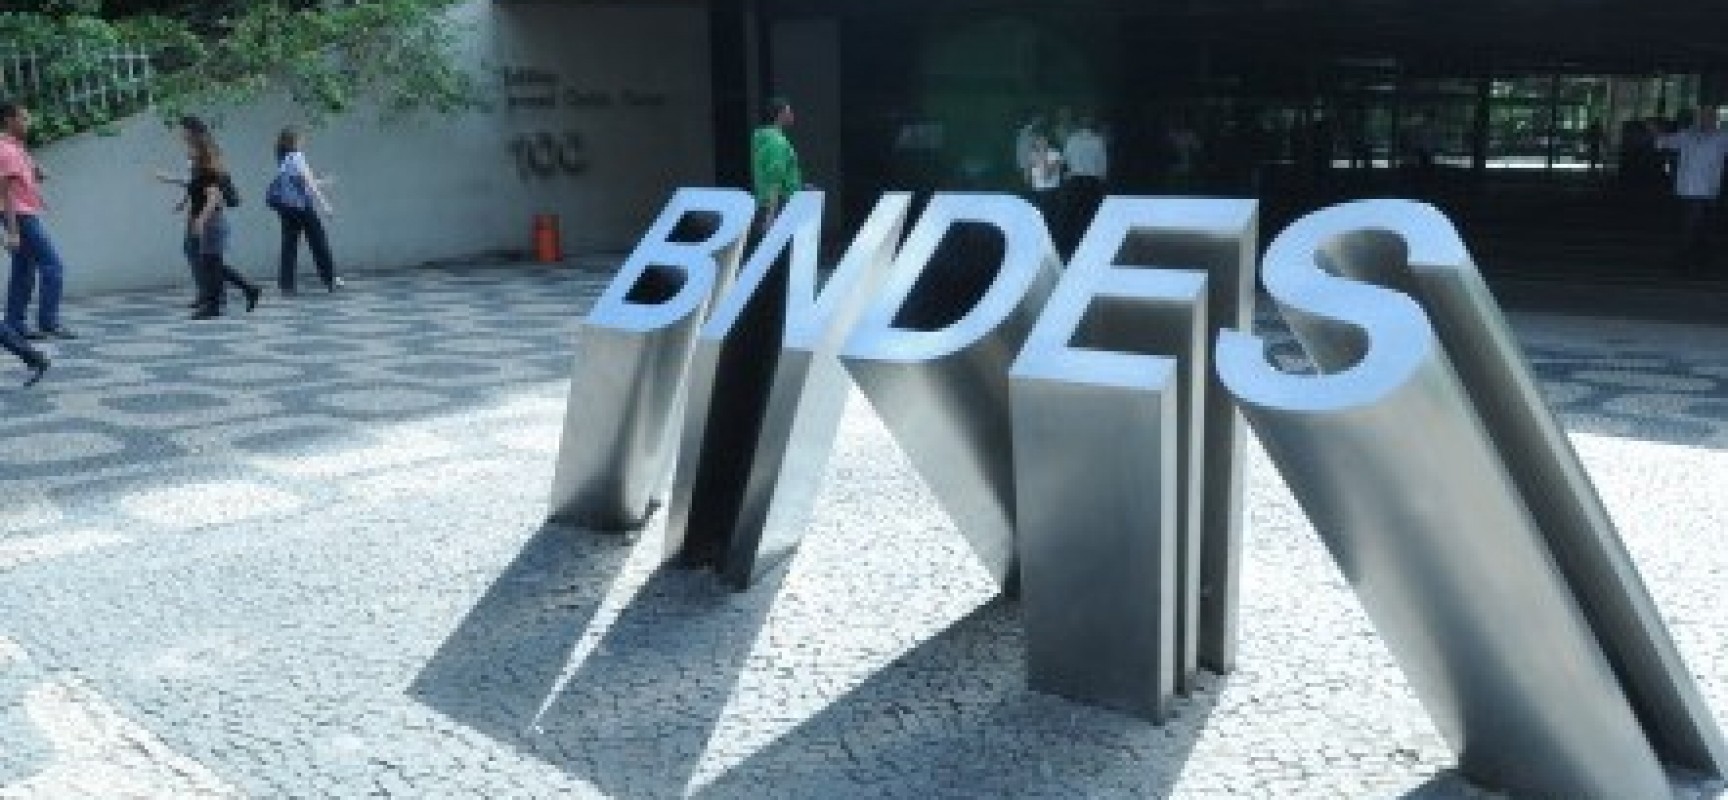 BNDES reabre empréstimos no exterior para empreiteiras investigadas na Lava Jato